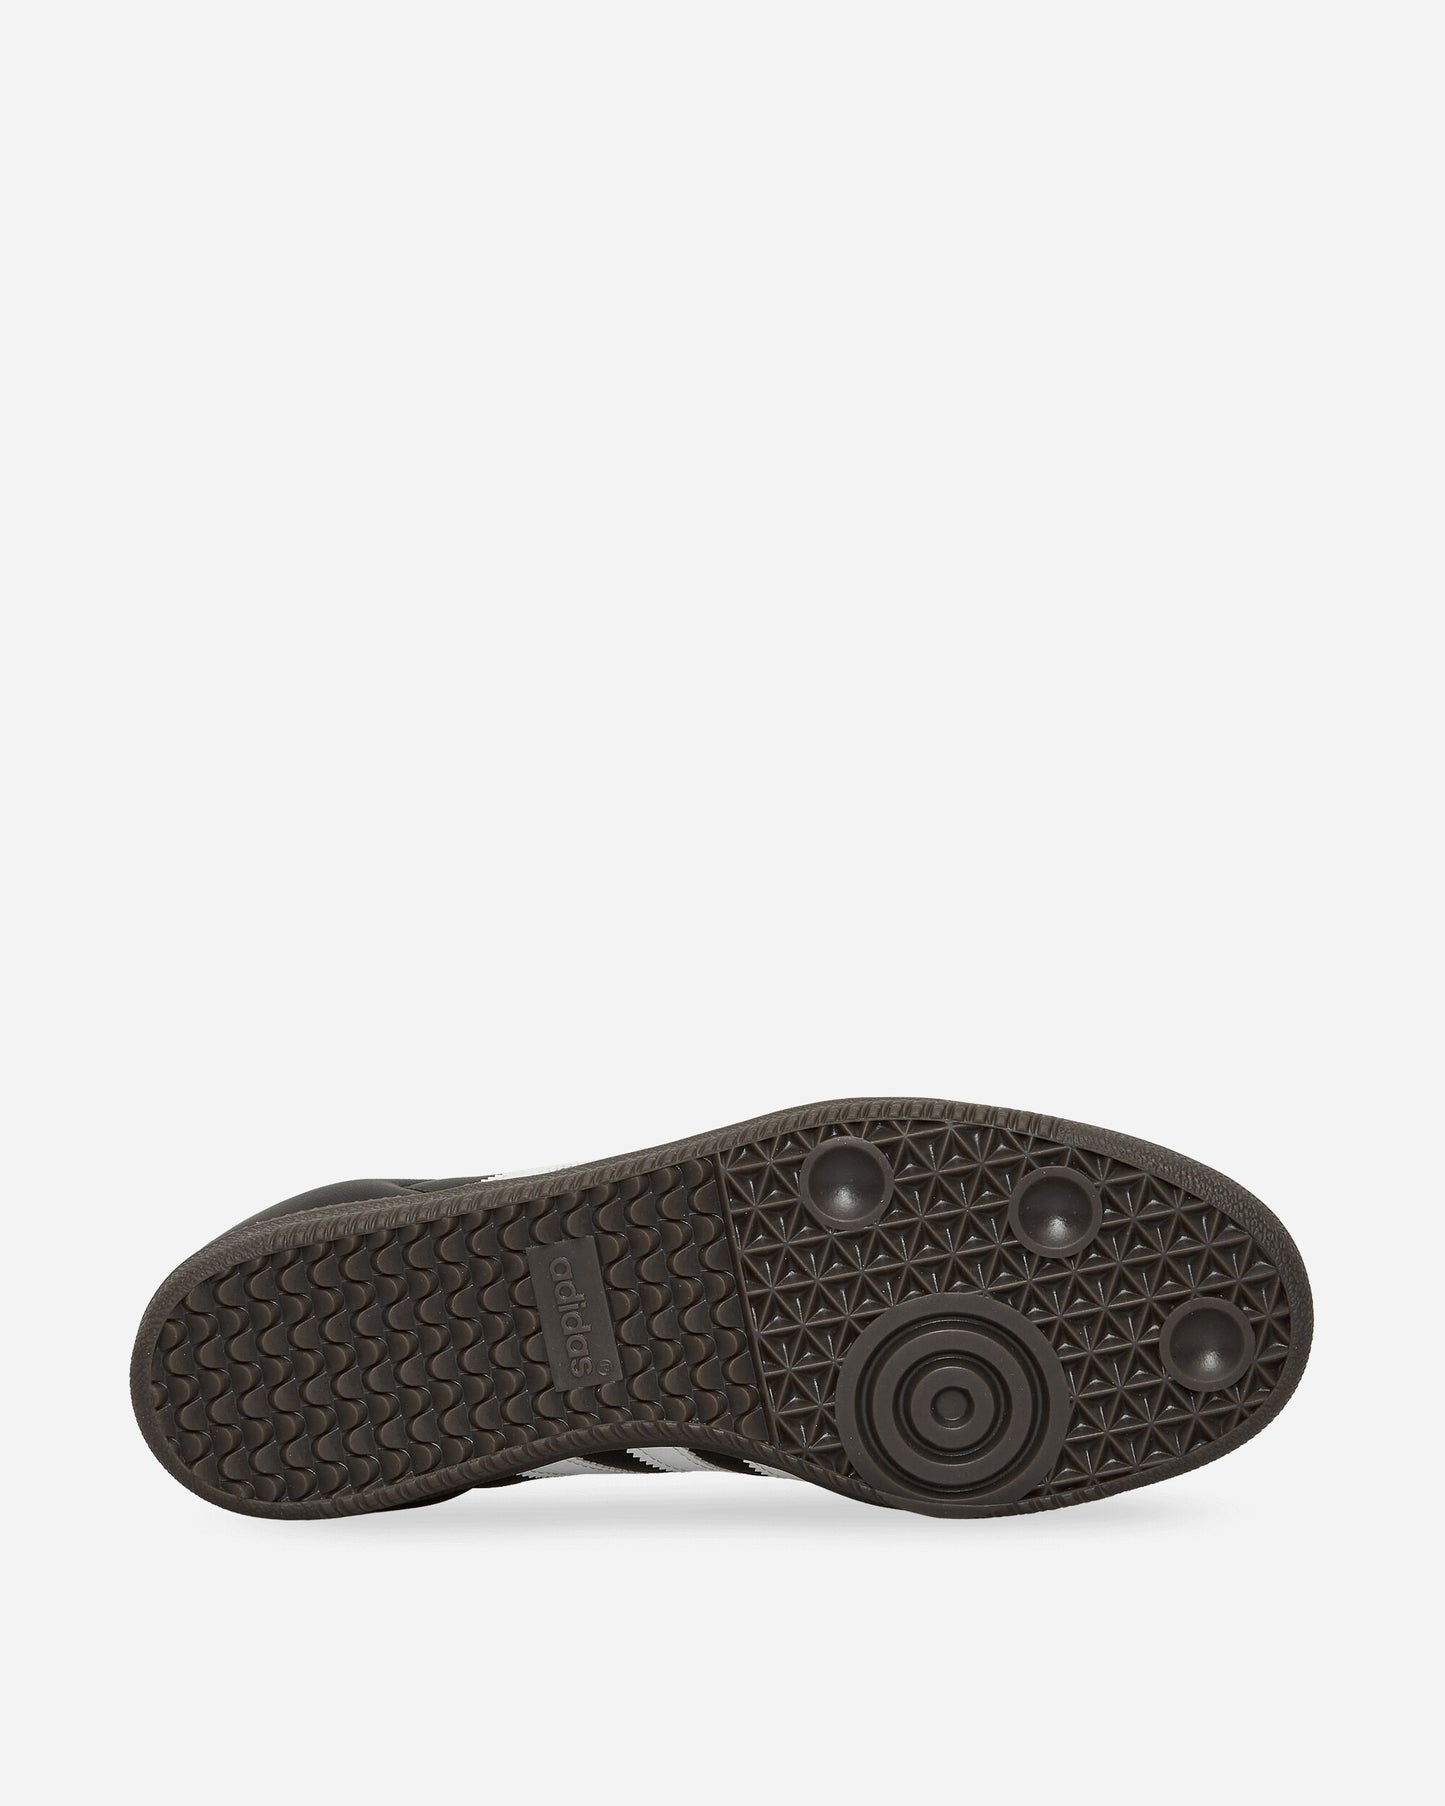 adidas Samba Og Core Black/Ftwr White Sneakers Low B75807 001